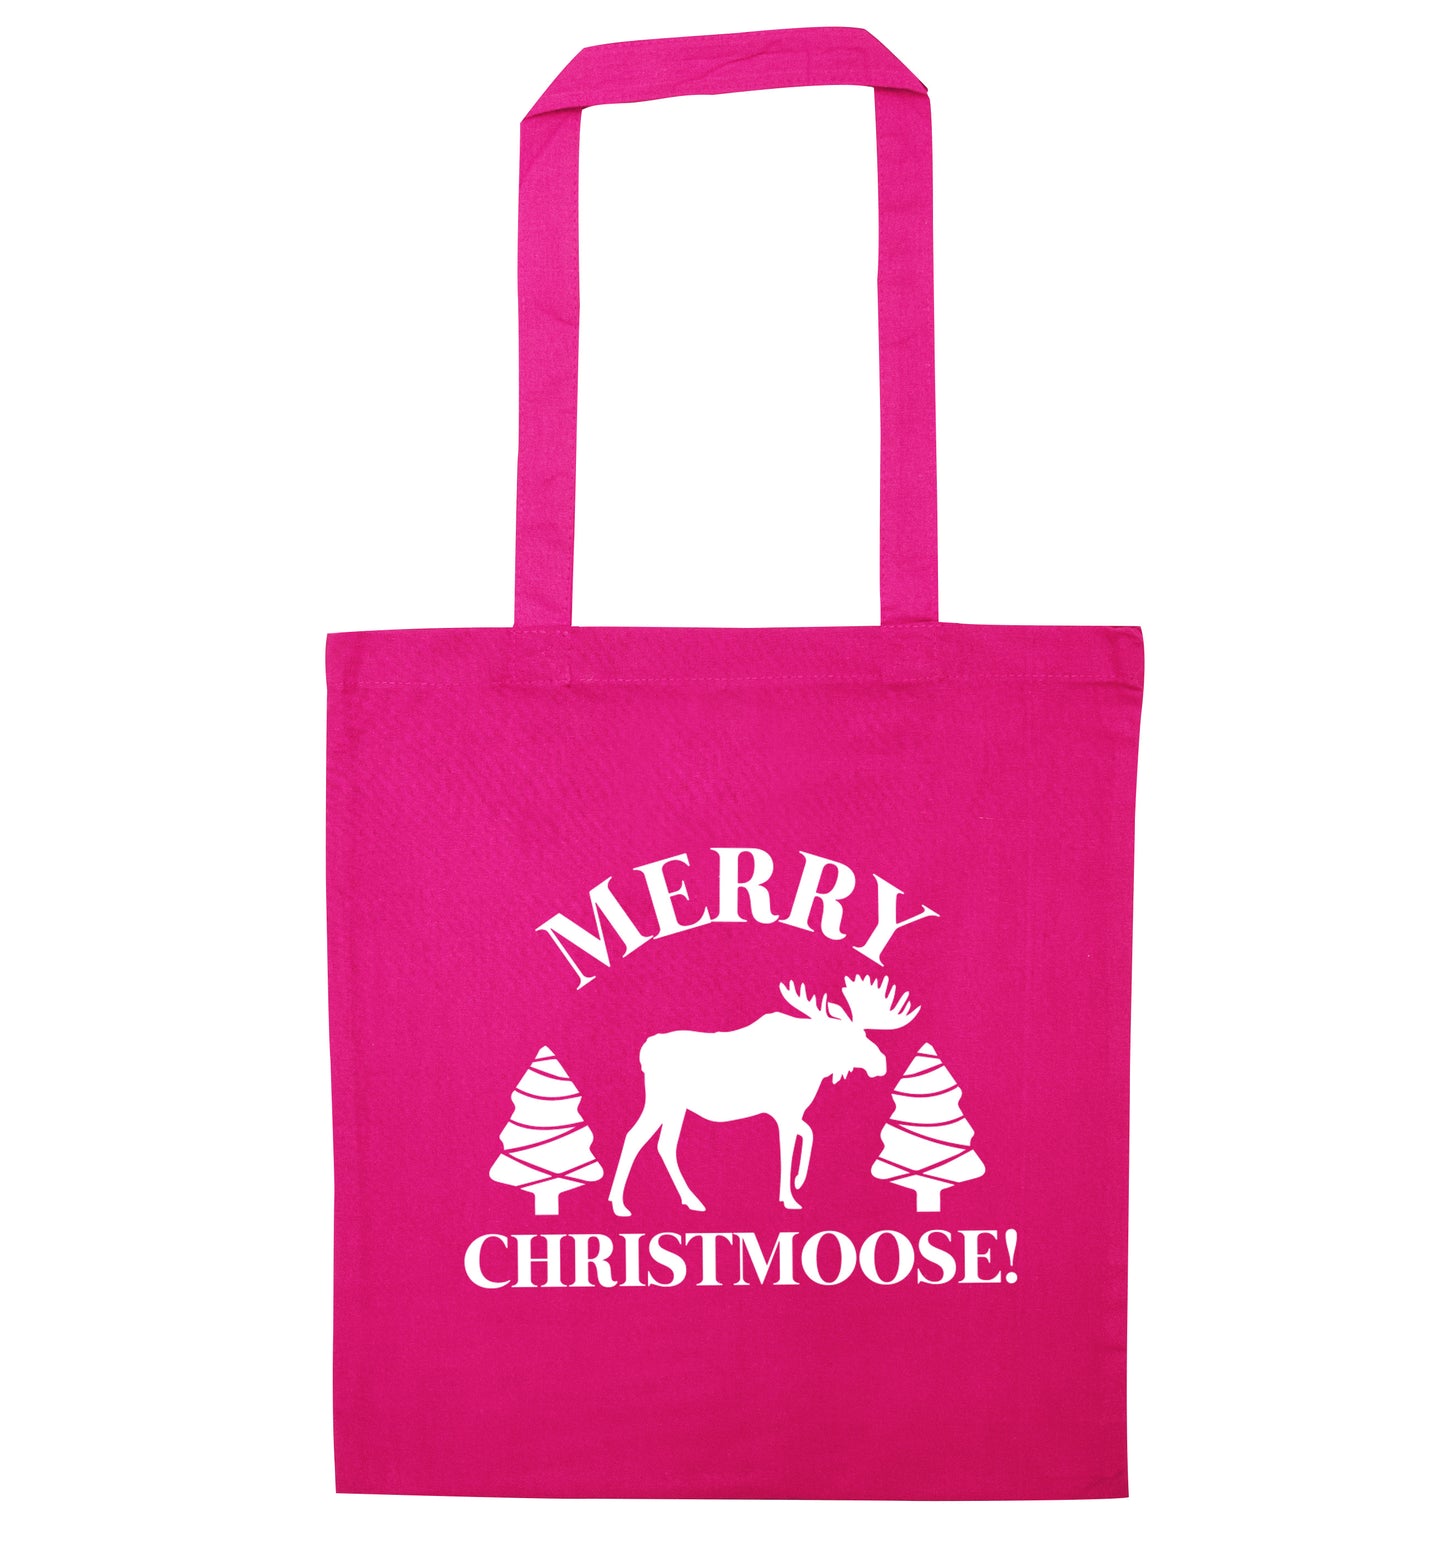 Merry Christmoose pink tote bag